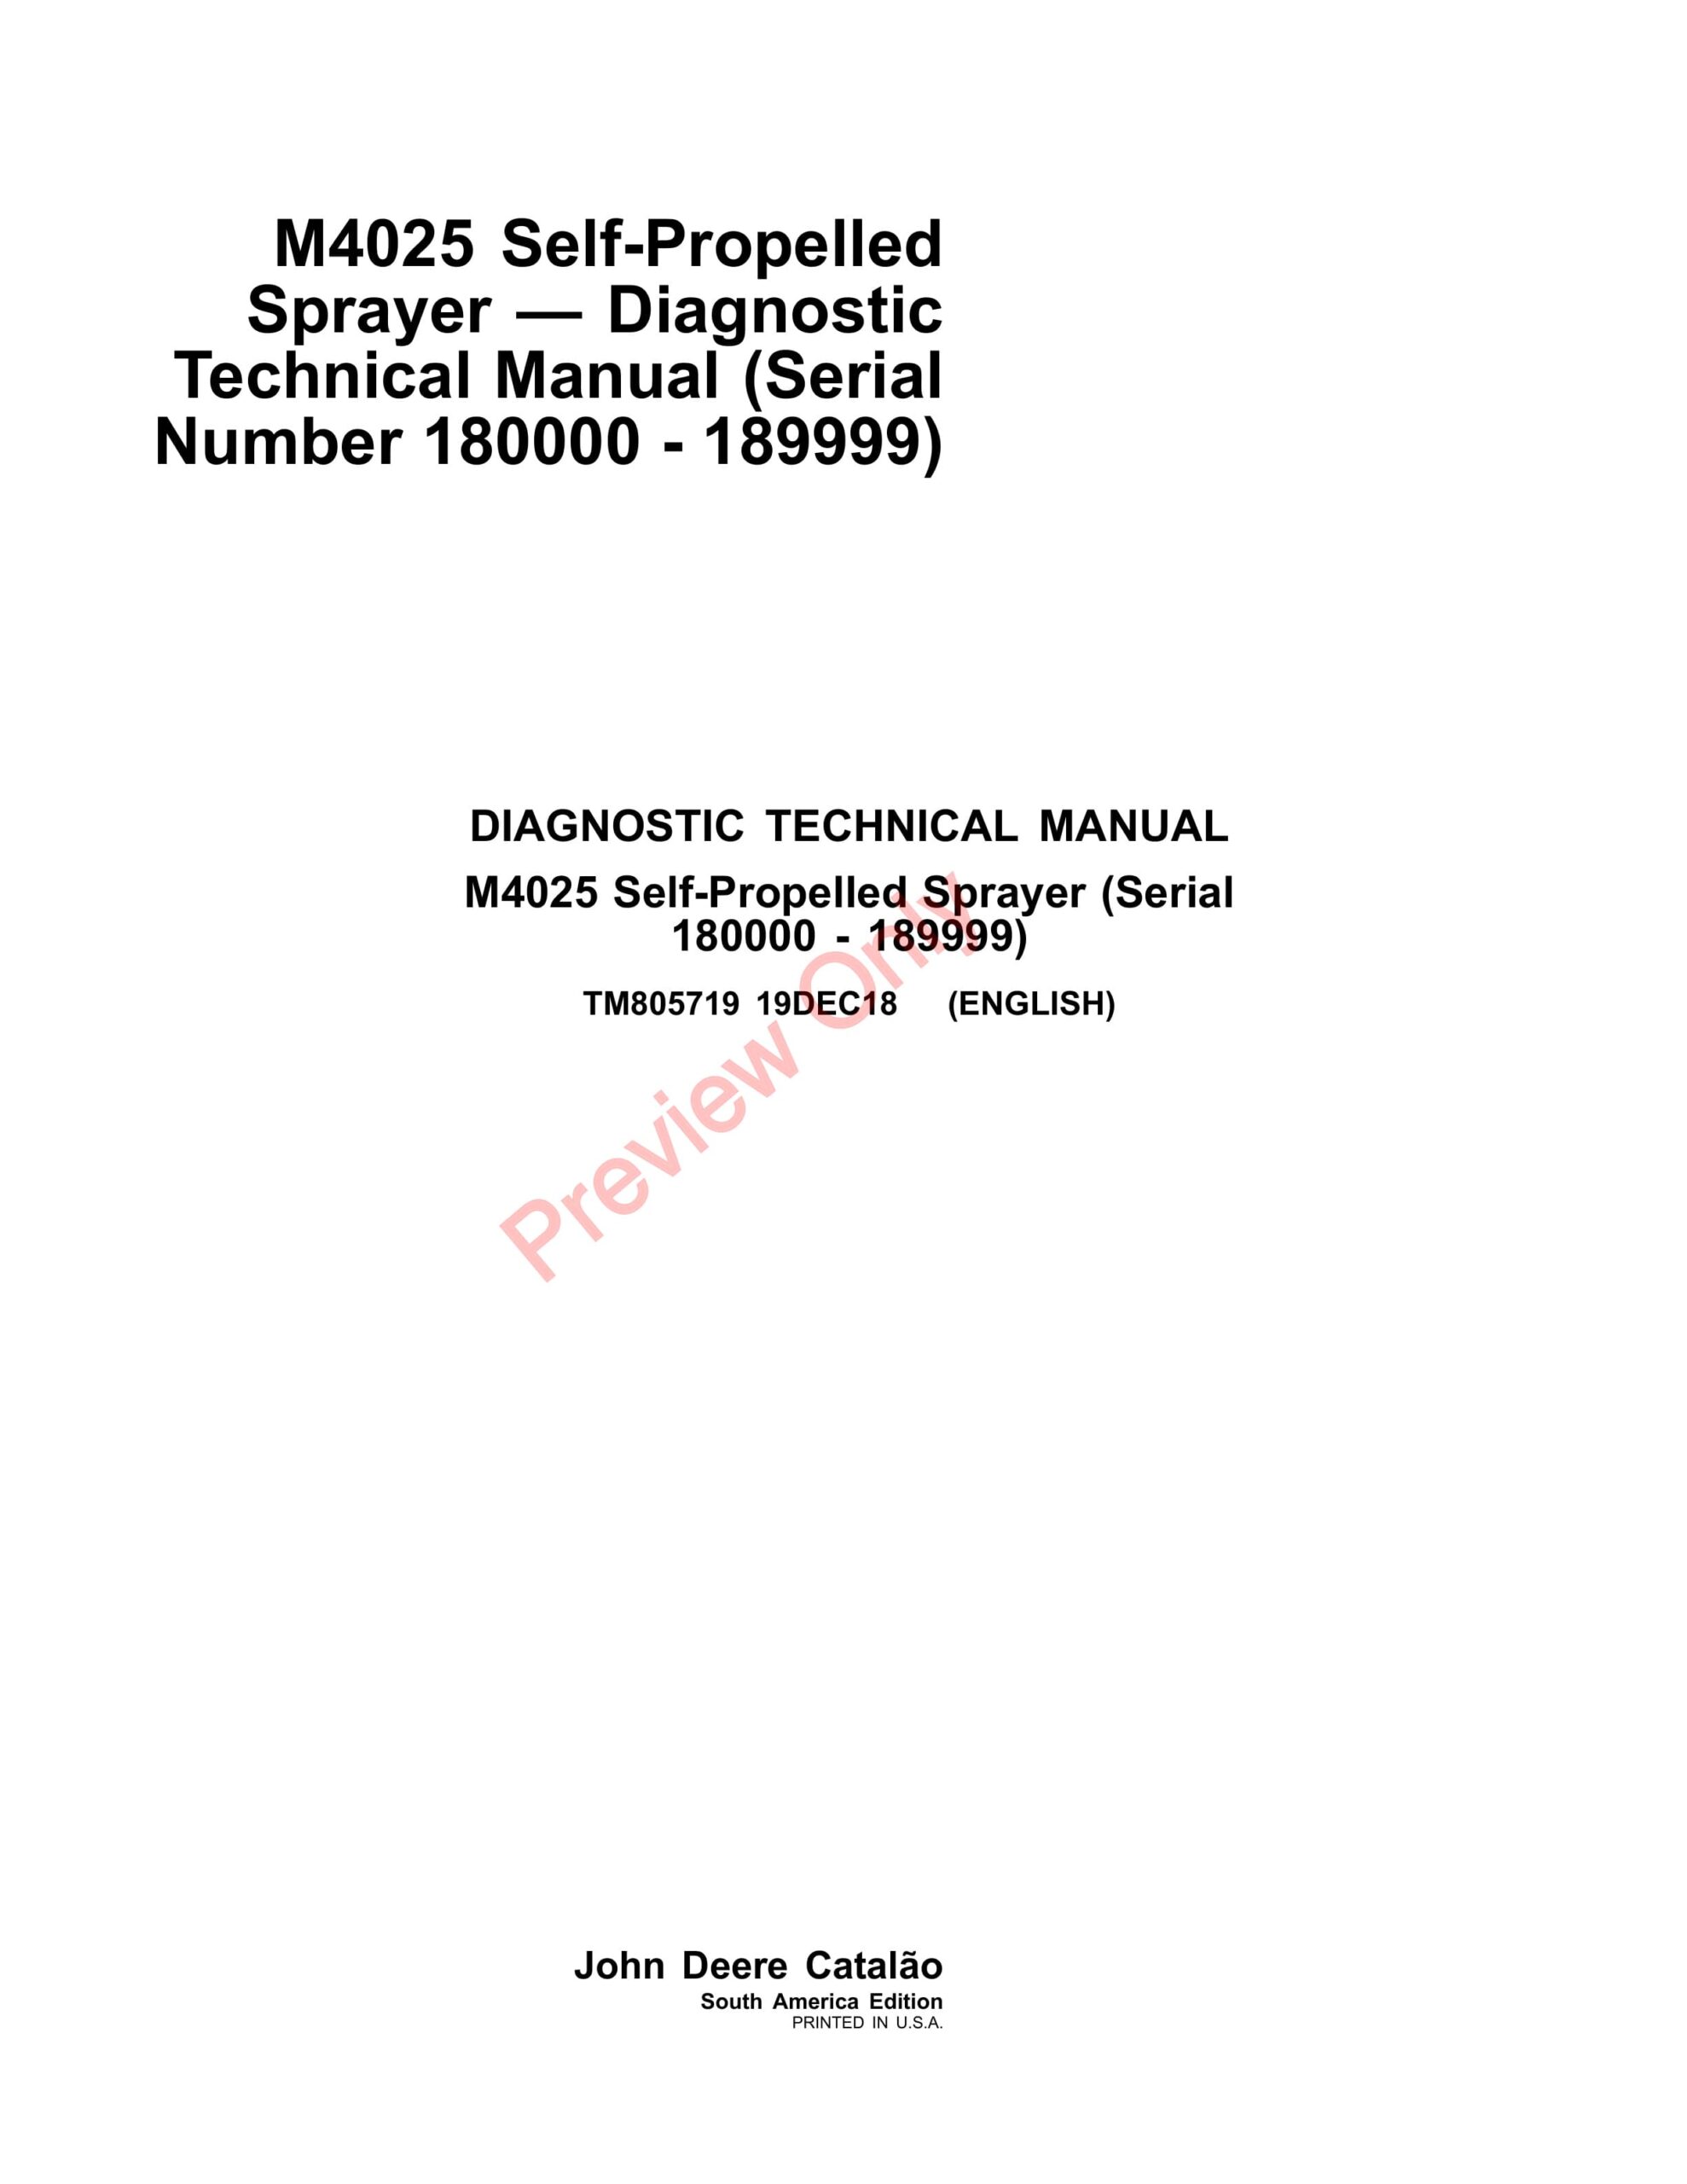 John Deere M4025 Self-Propelled Sprayer Diagnostic Technical Manual TM805719 19DEC18-1